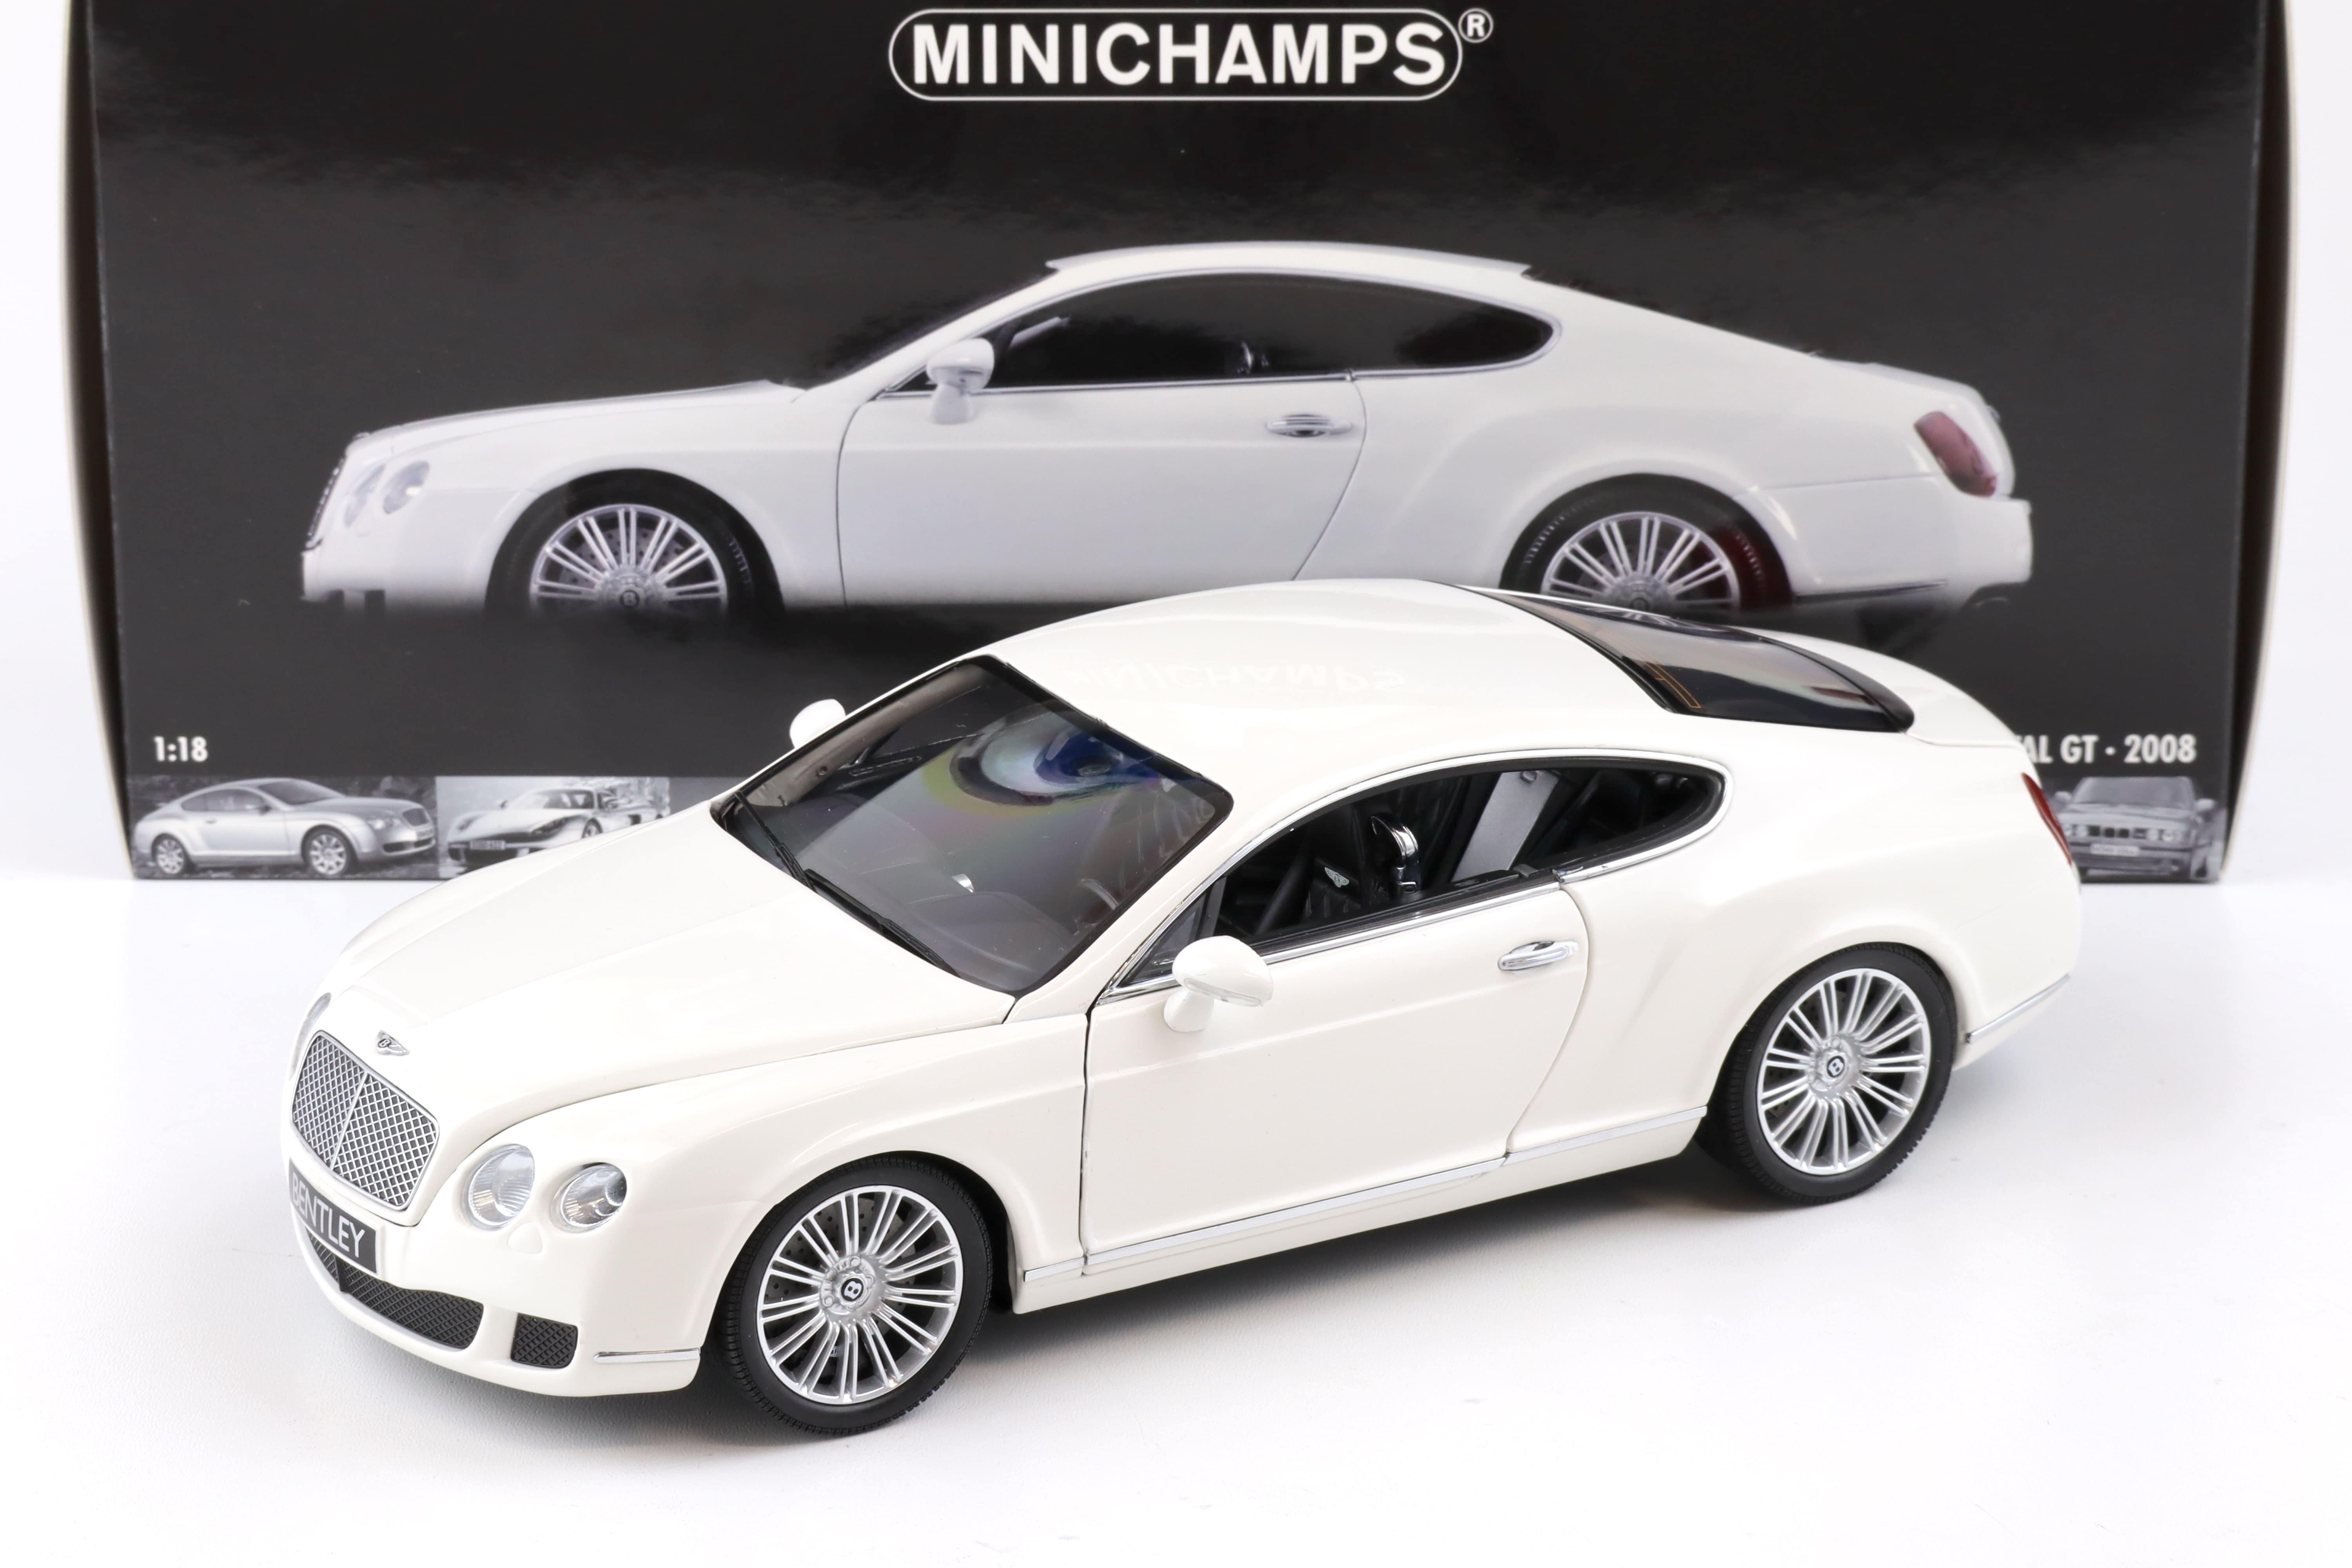 1:18 Minichamps Bentley Continental GT 2008 white